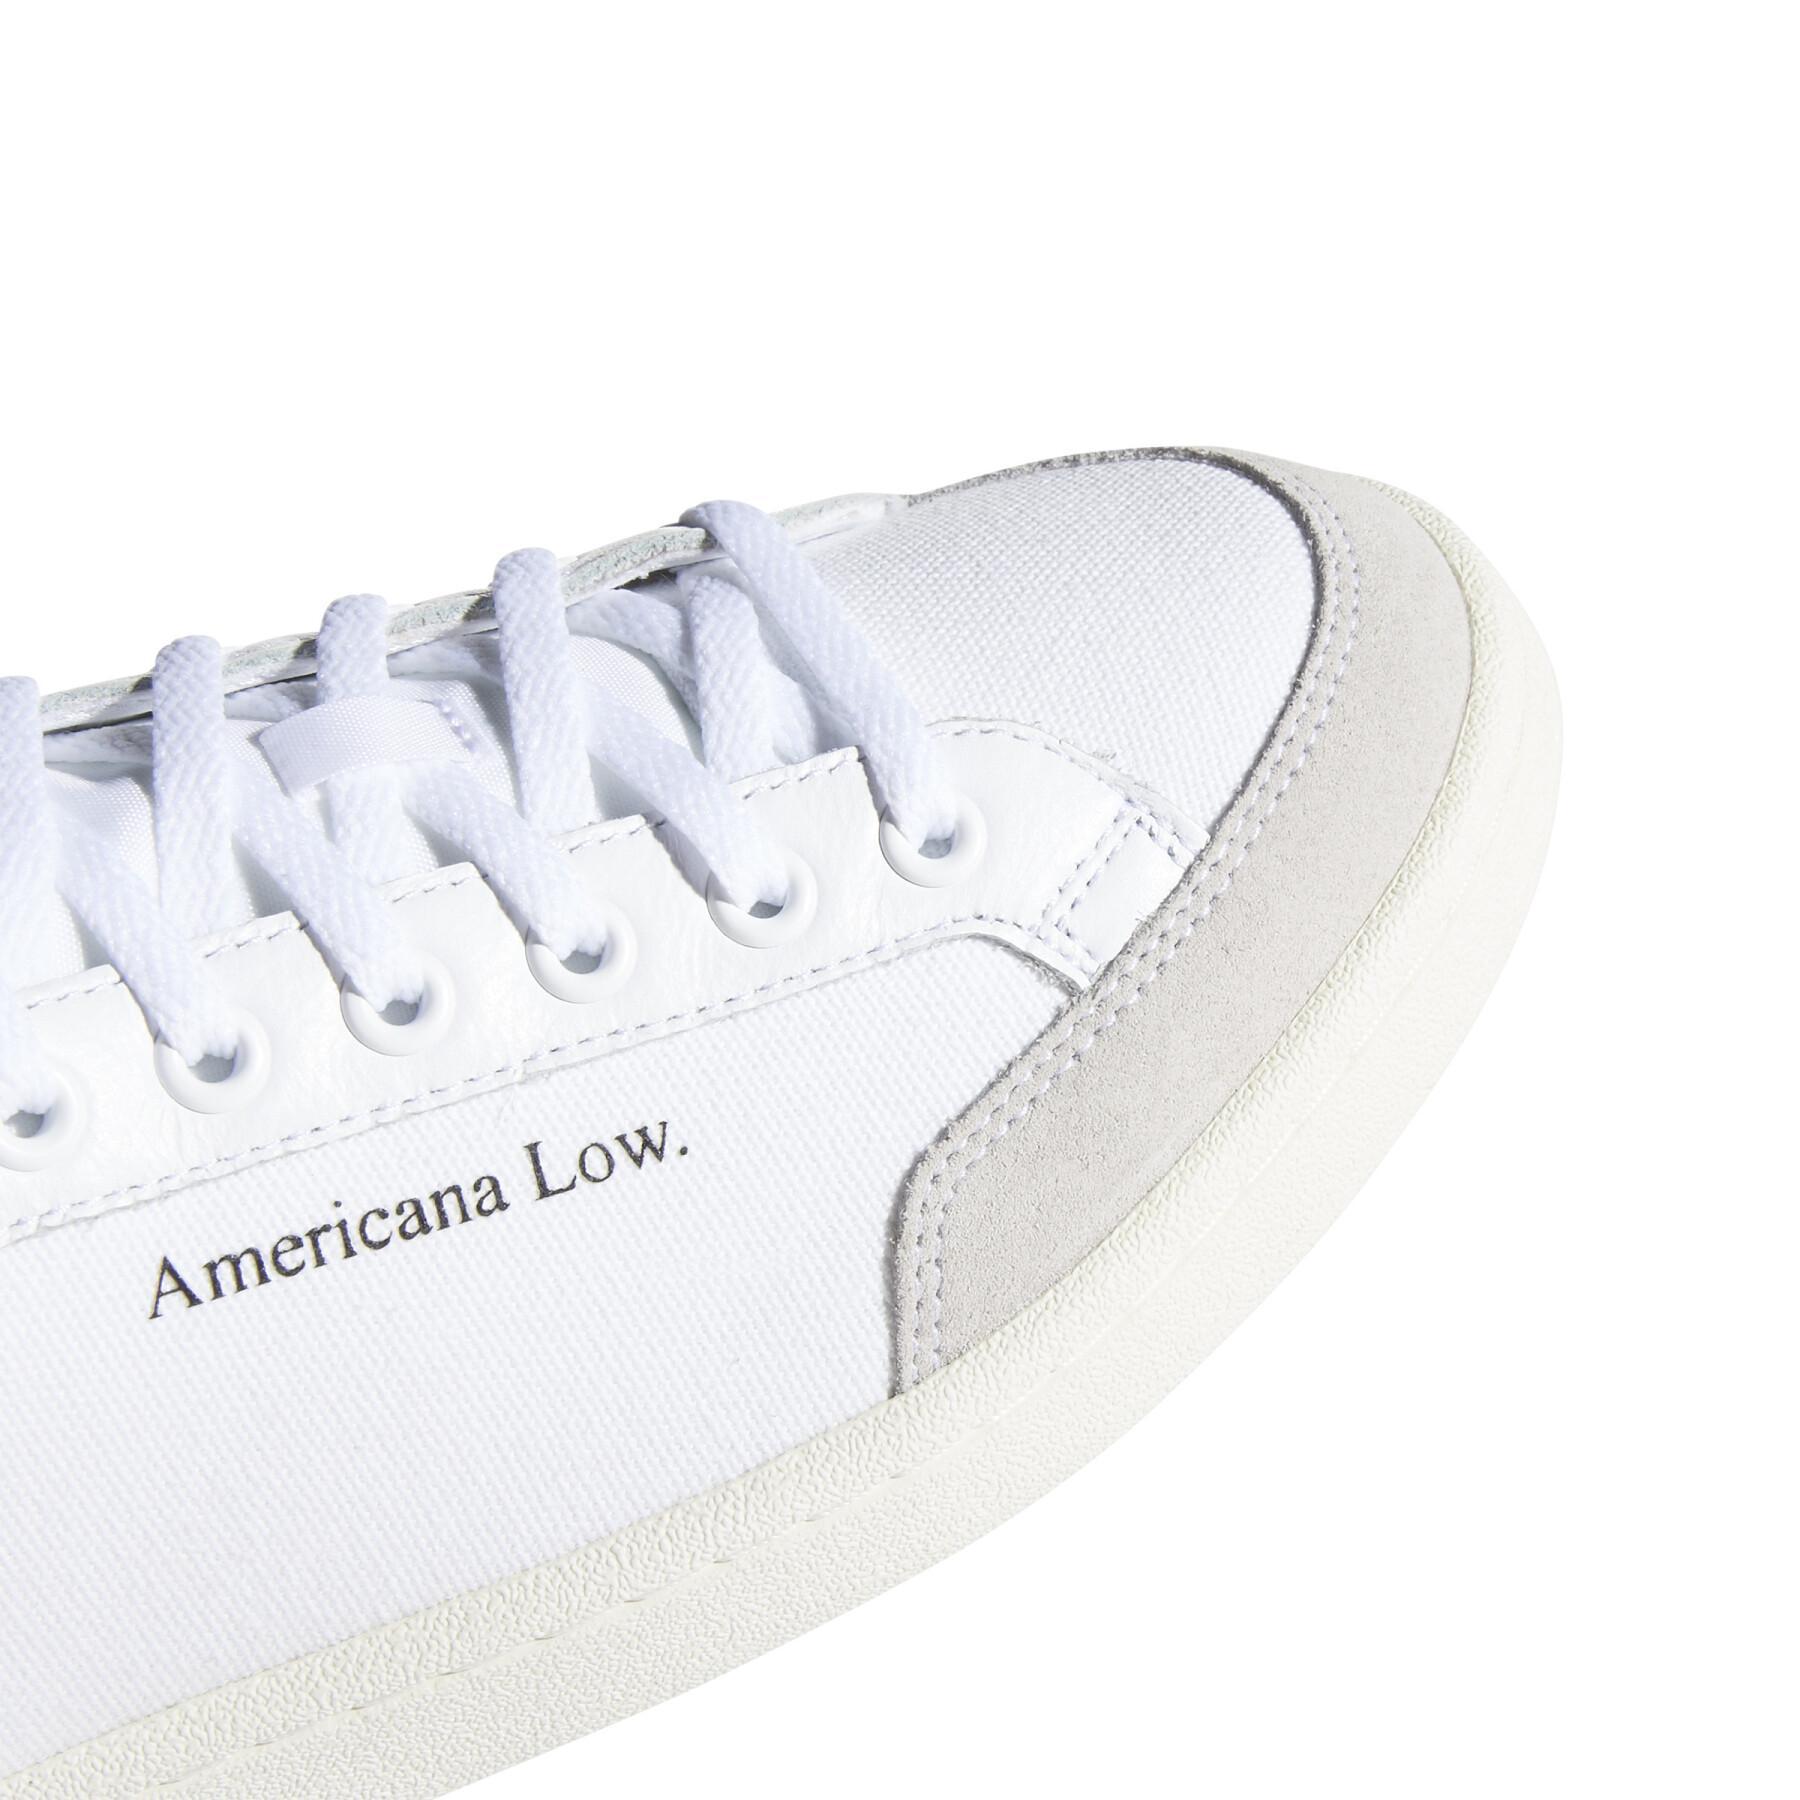 Tränare adidas Originals Americana Low